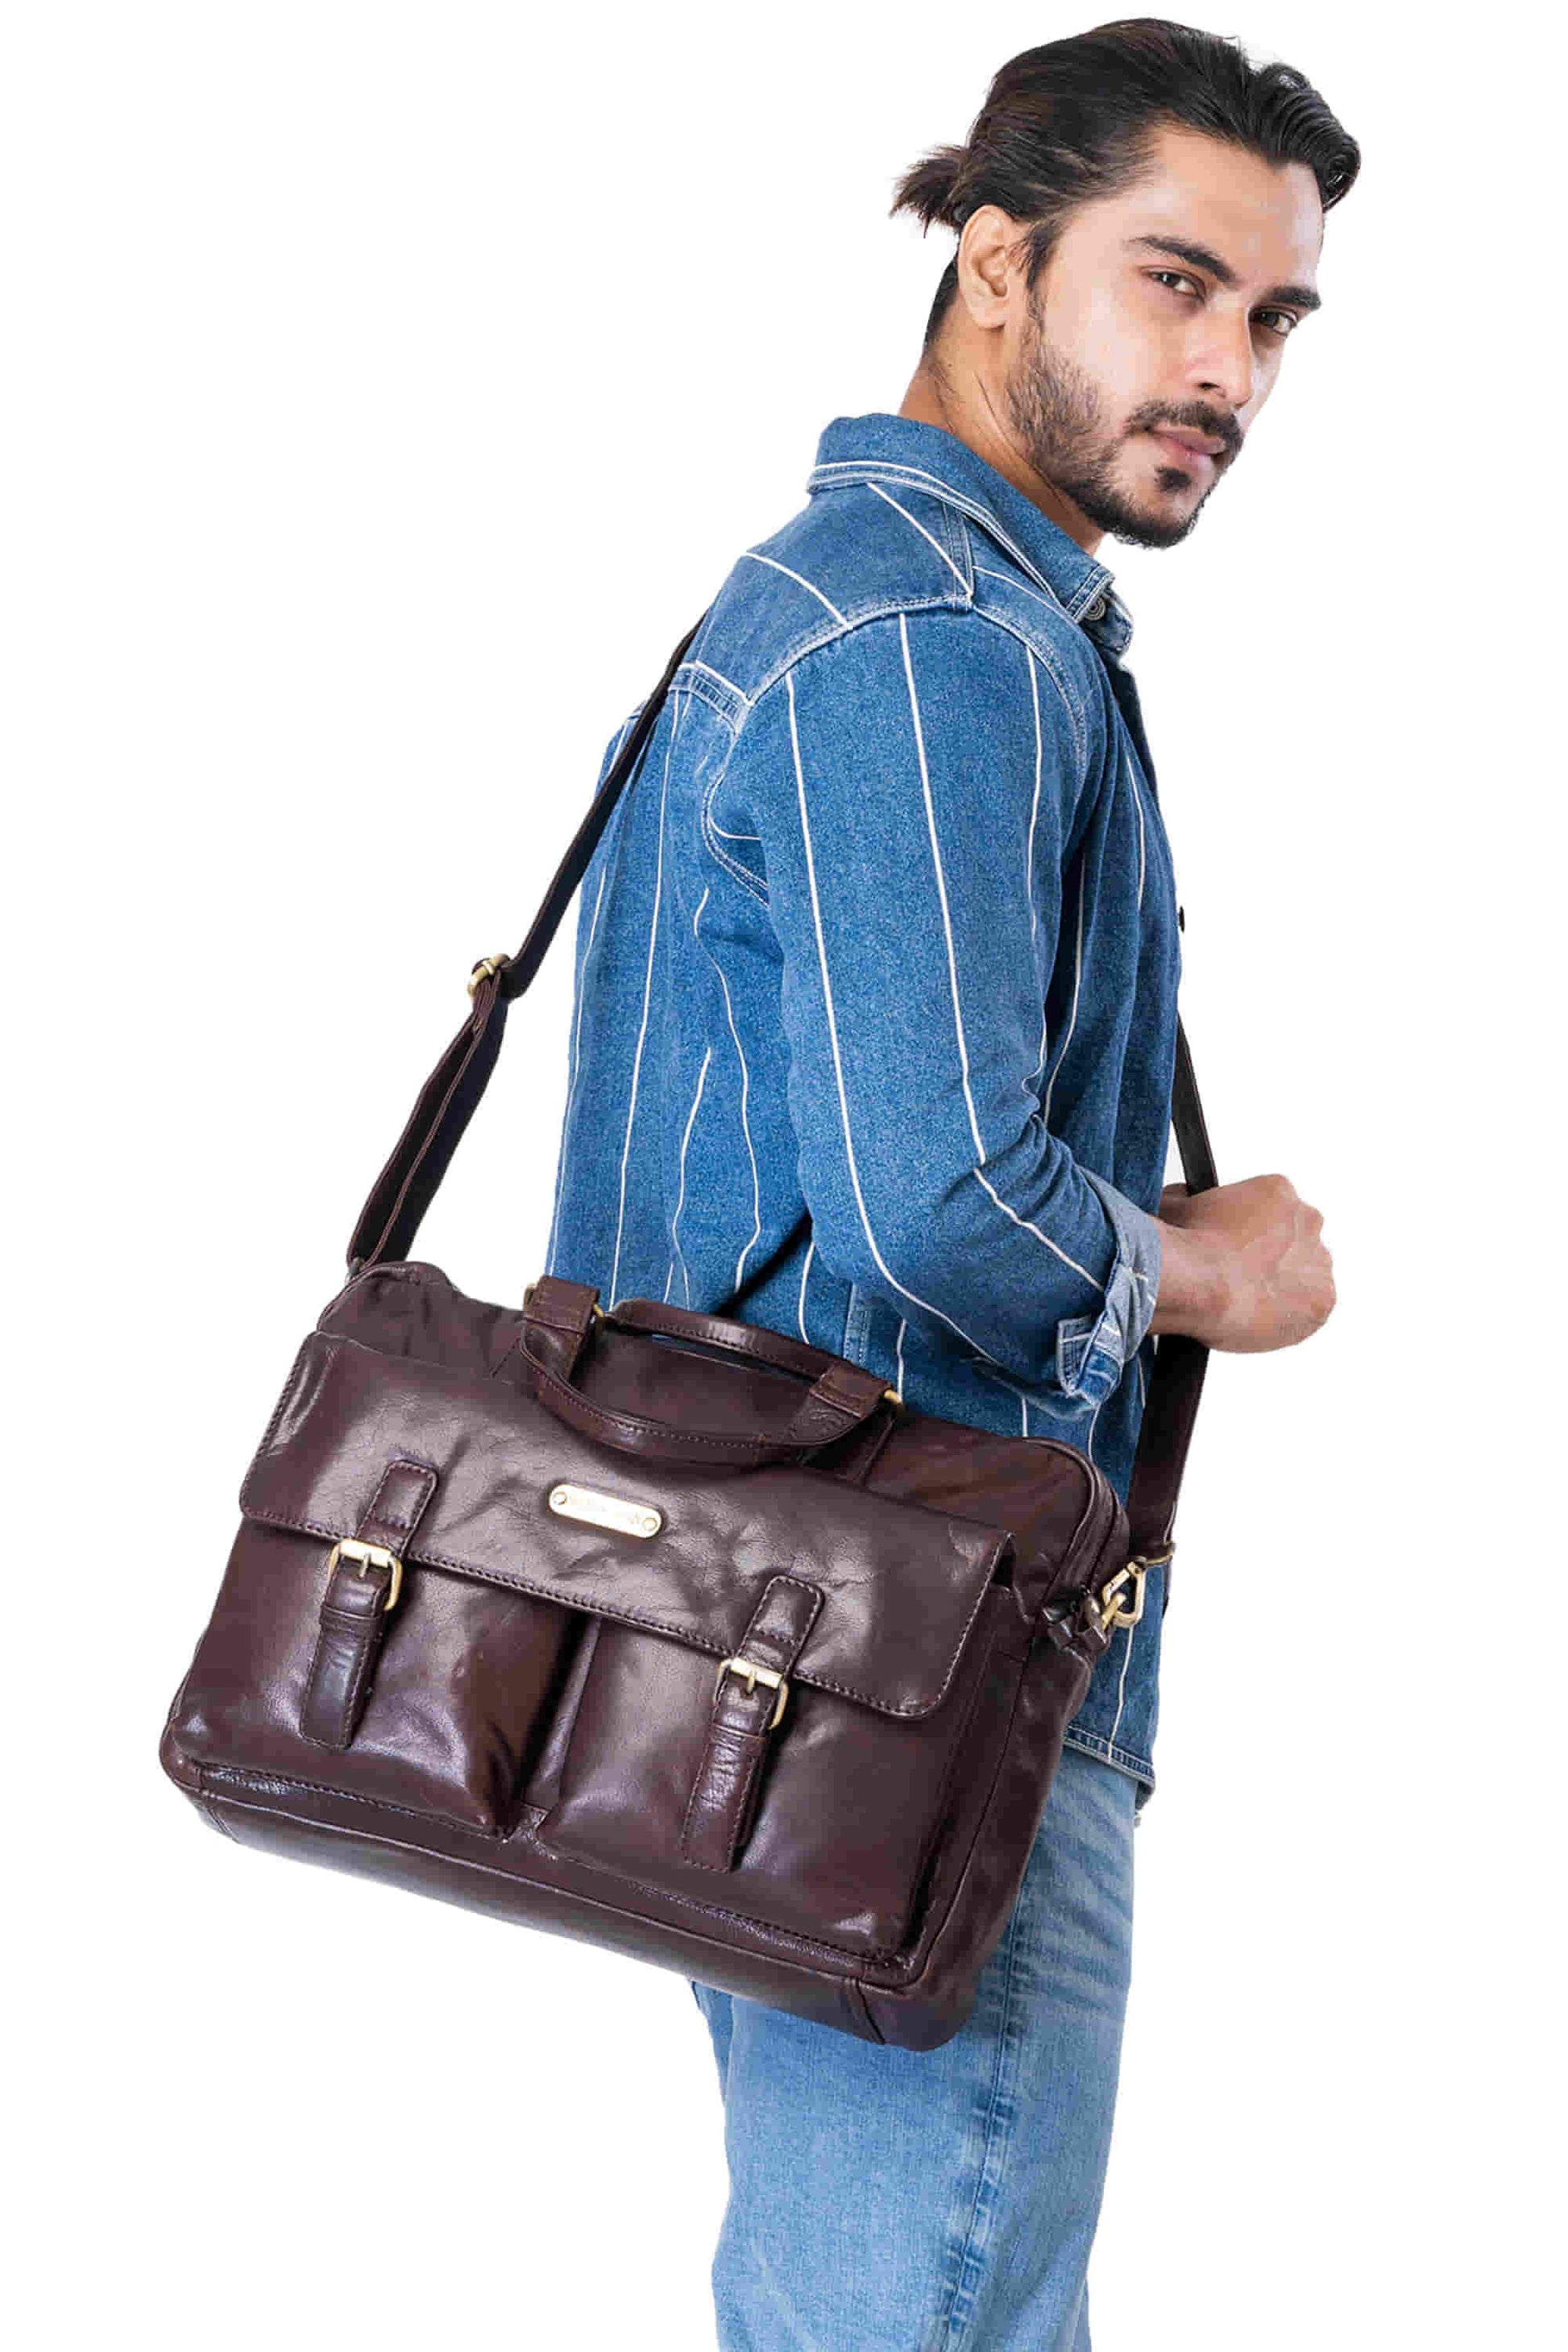 Full Grain Leather Crossbody Bag Small Messenger Bag Casual Shoulder Bag